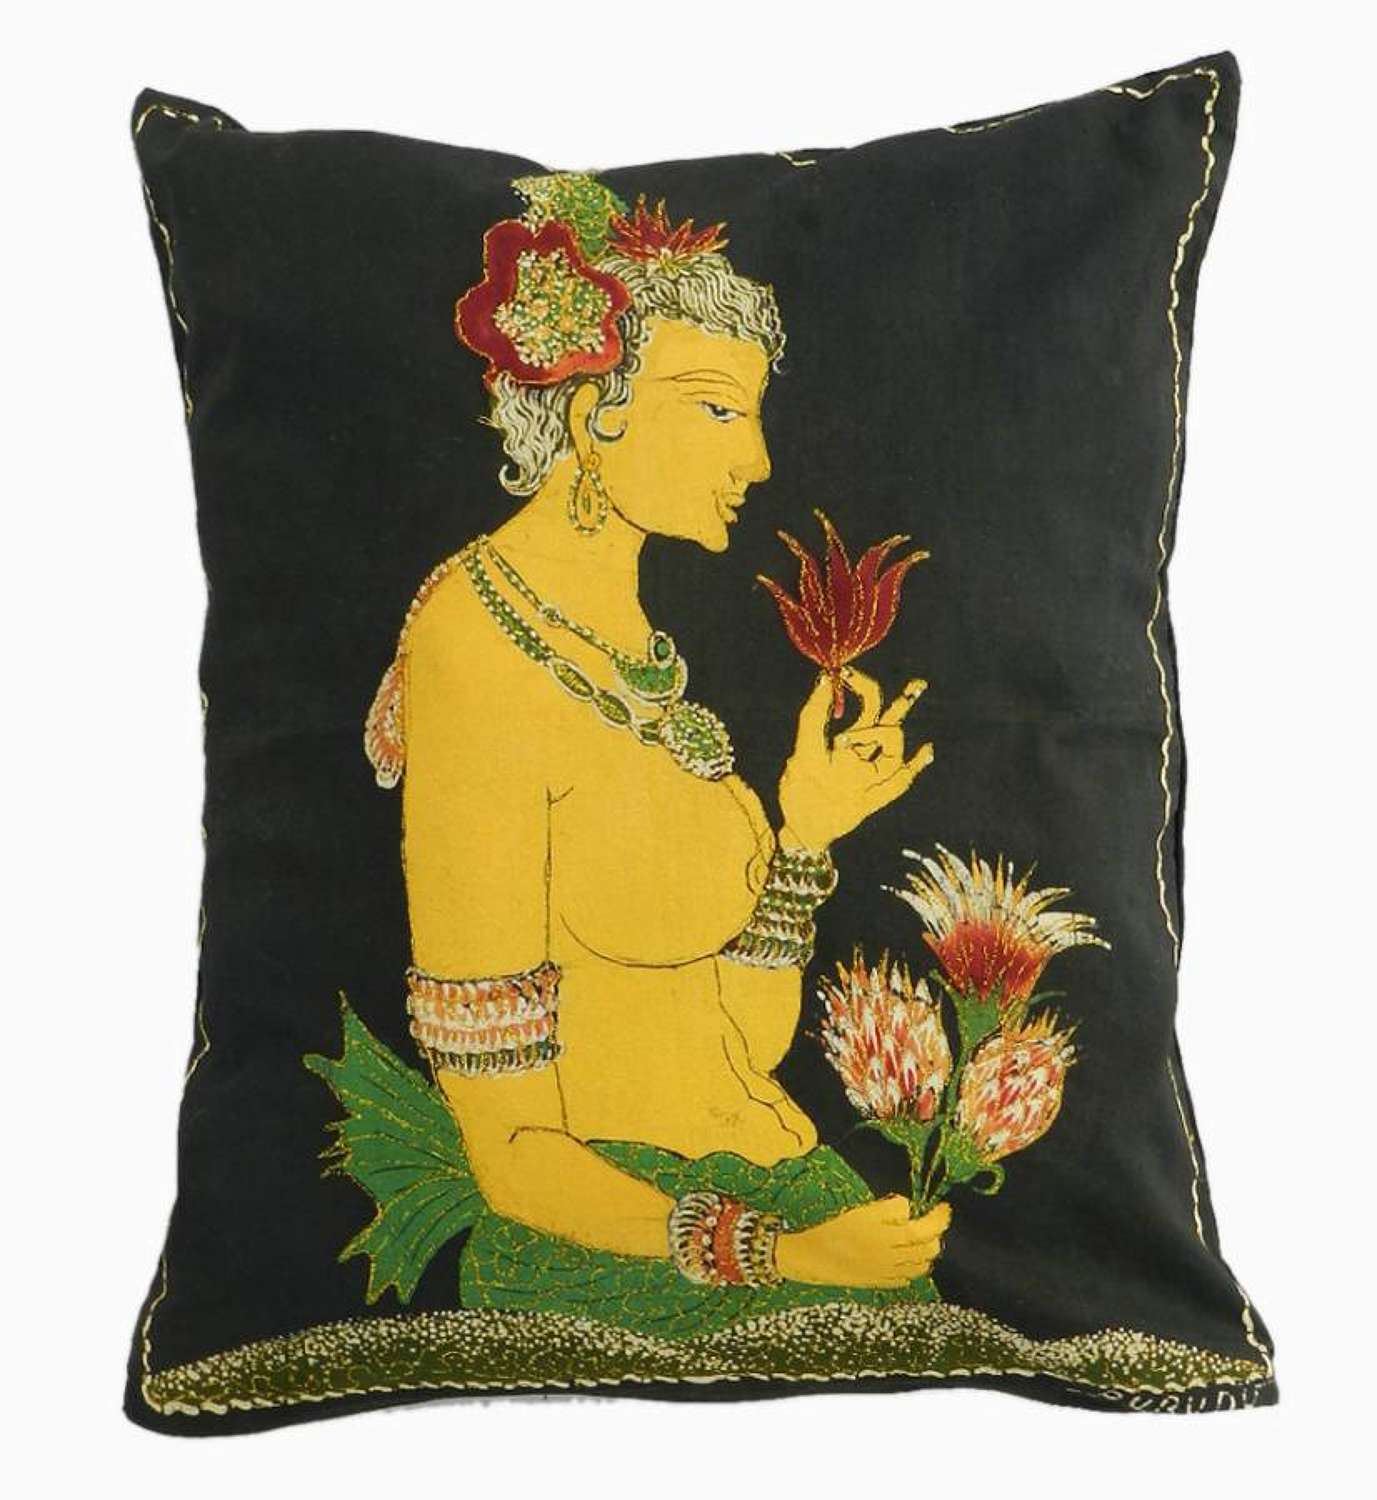 Vintage Indian Pillow Accent Cushion c1960